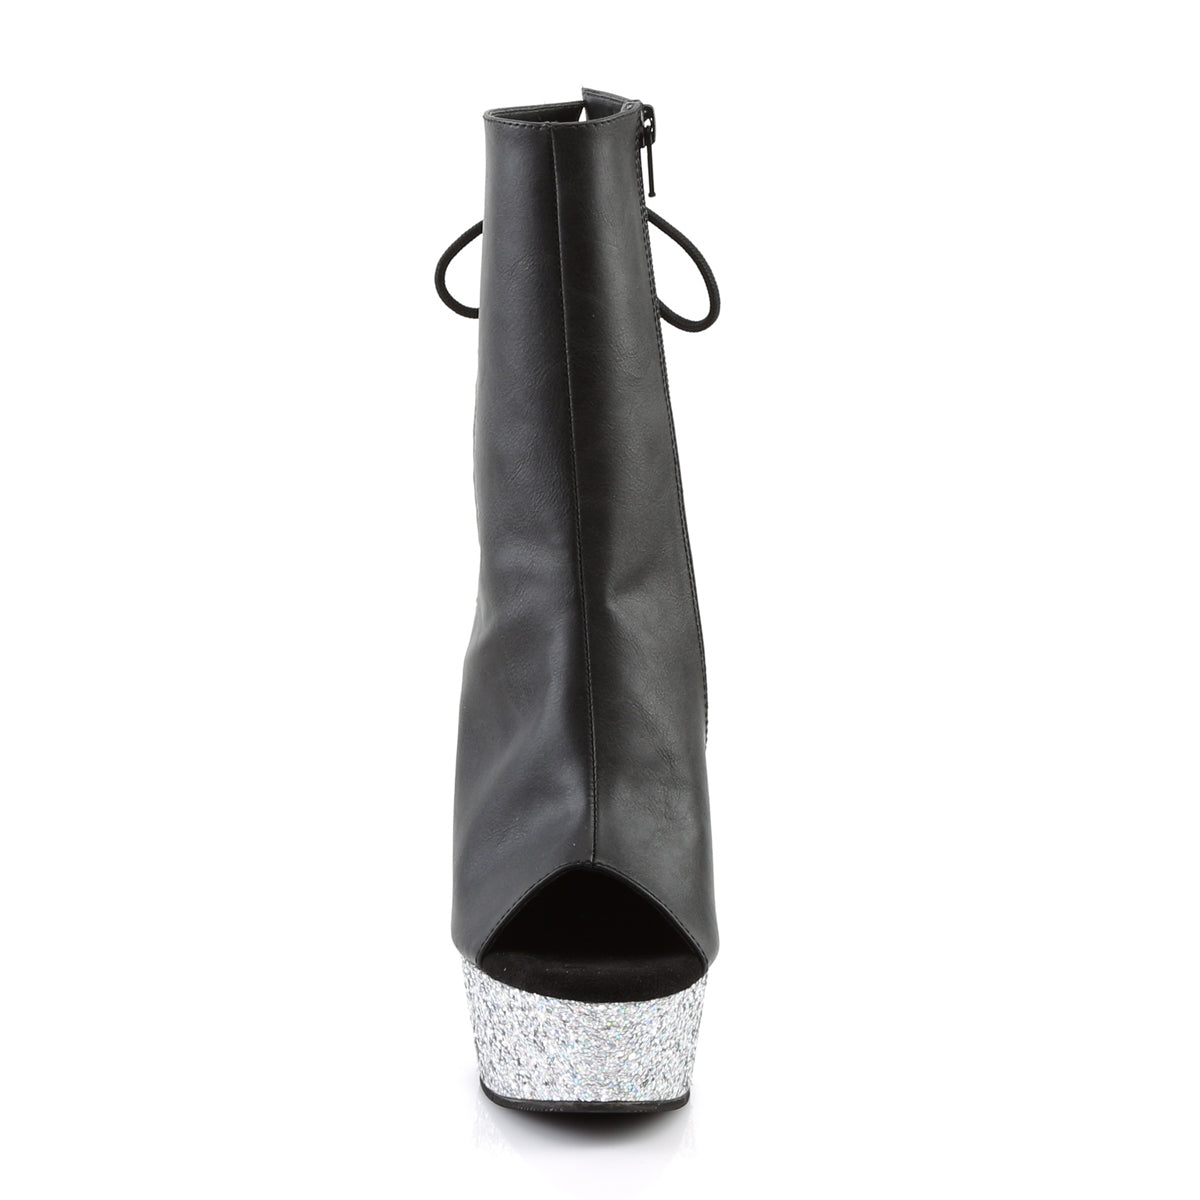 DELIGHT-1018LG Black & Silver Calf High Peep Toe Boots